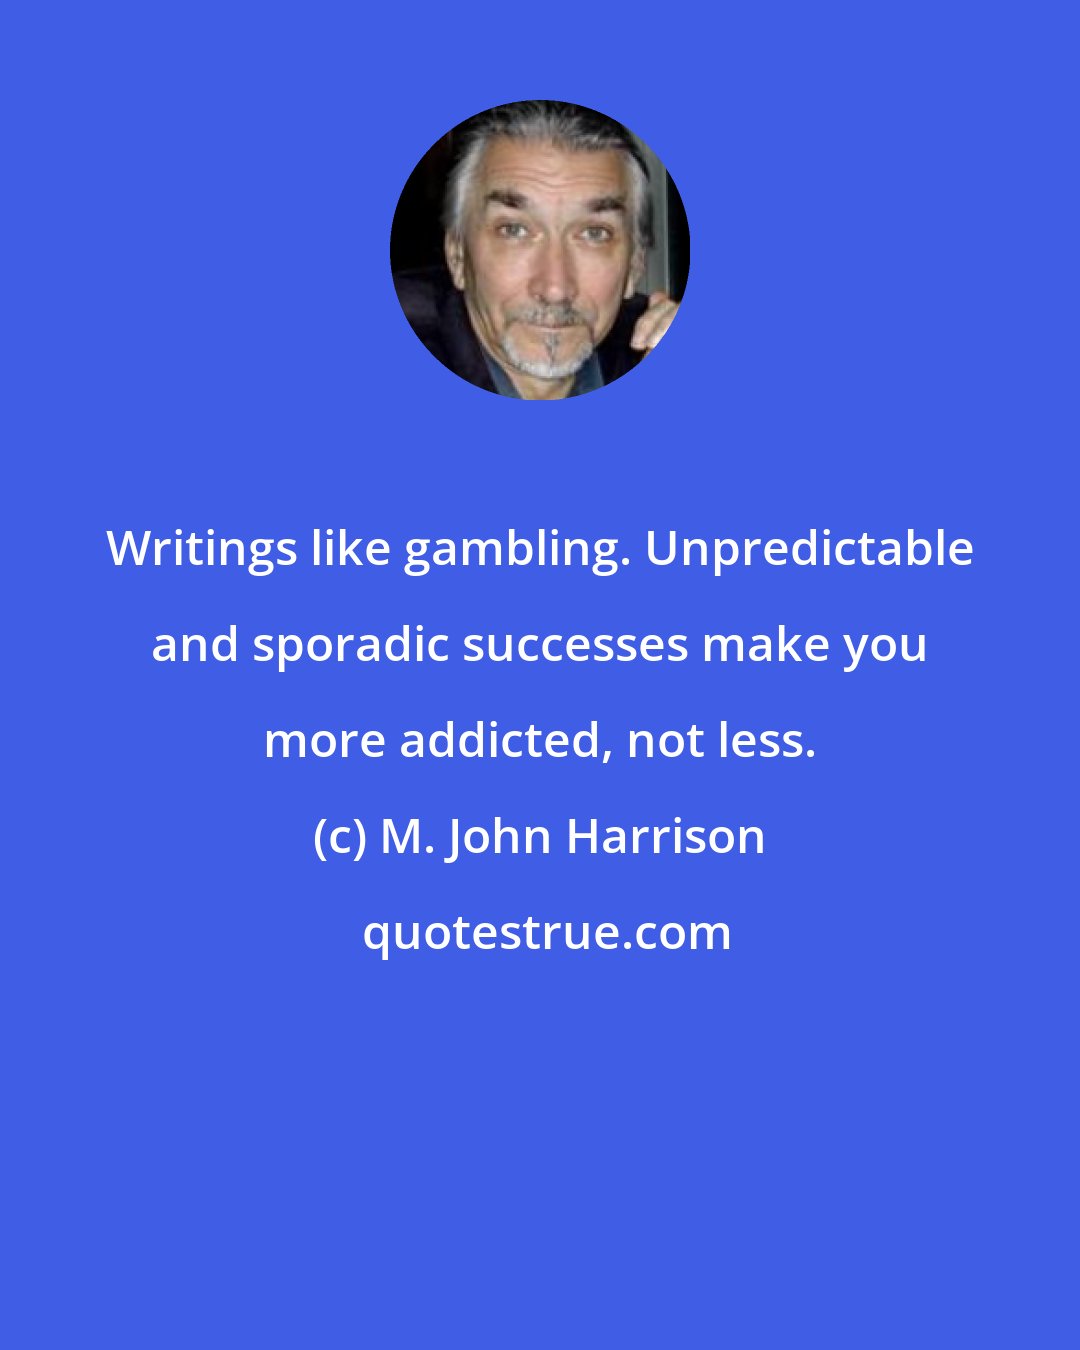 M. John Harrison: Writings like gambling. Unpredictable and sporadic successes make you more addicted, not less.